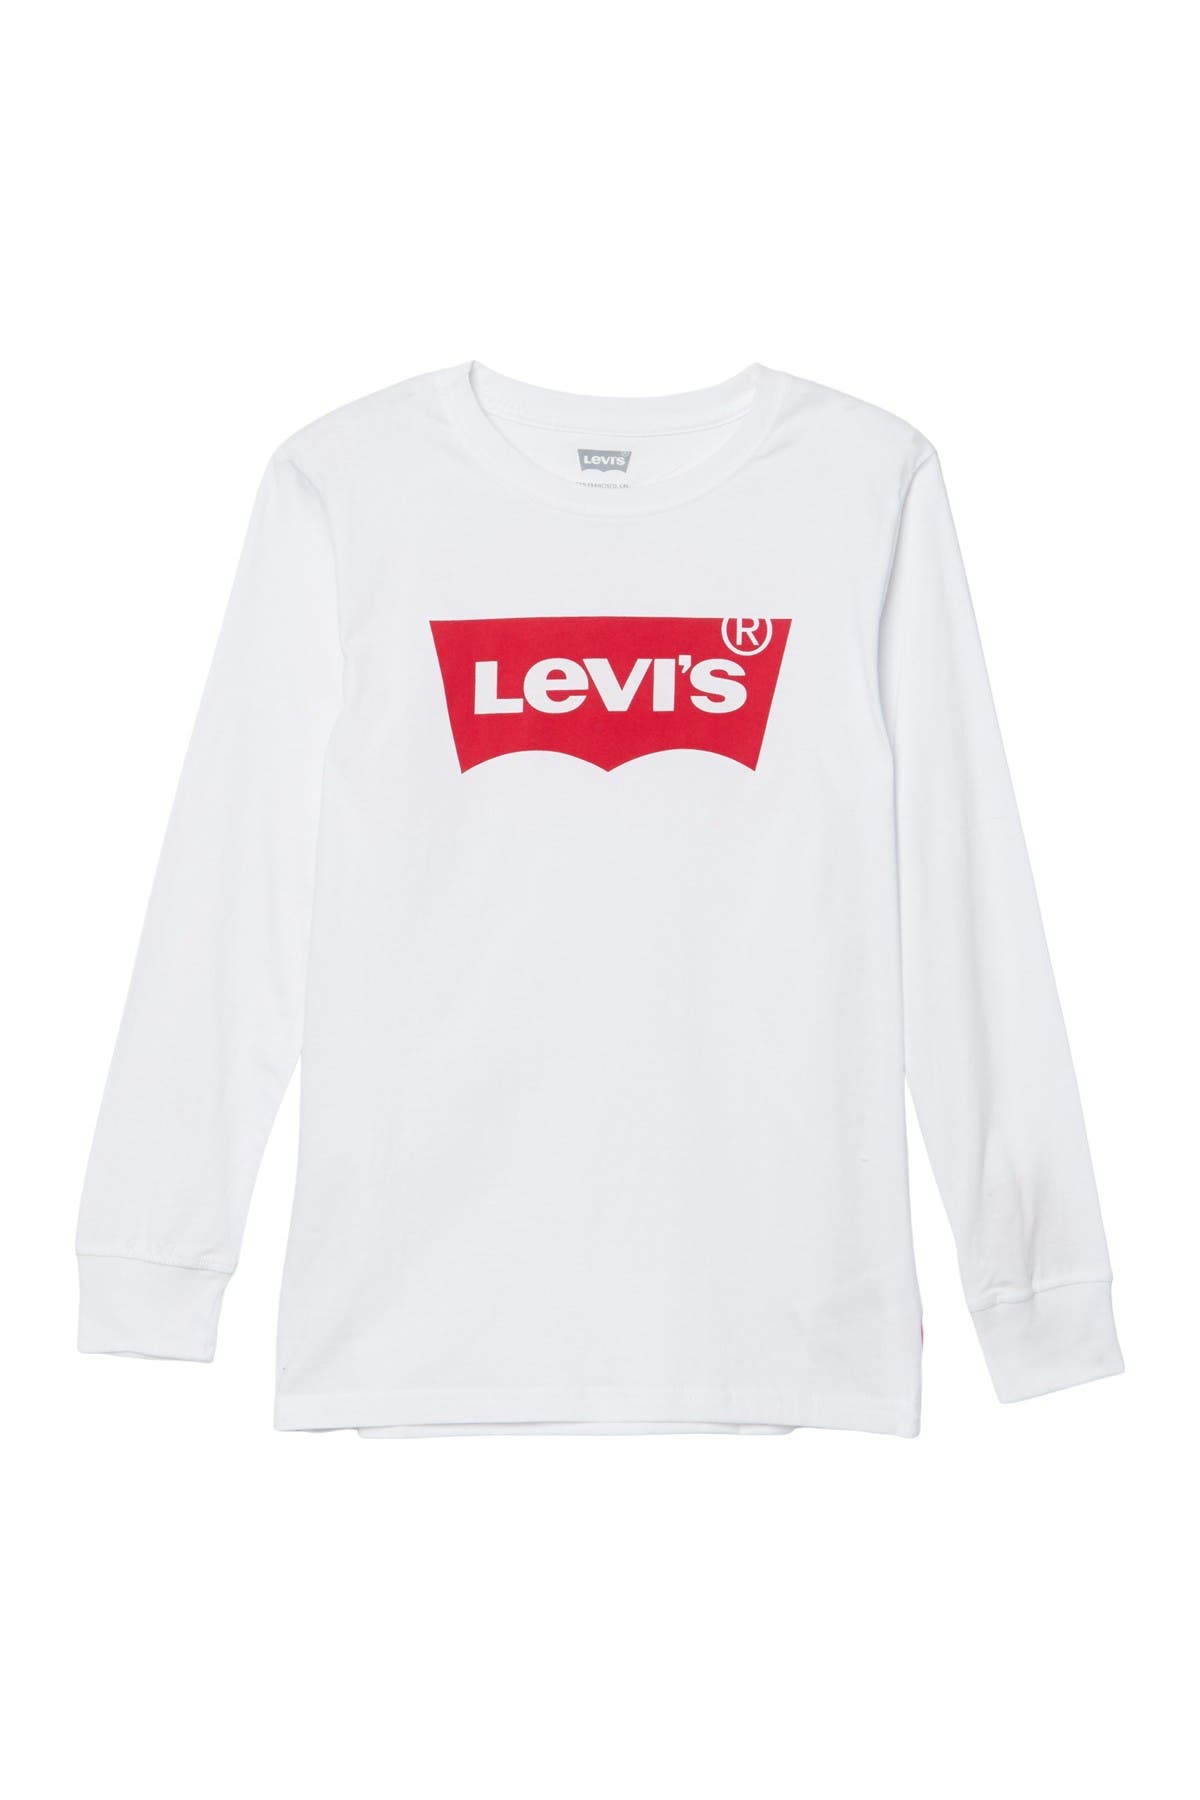 long sleeve levi's t shirt